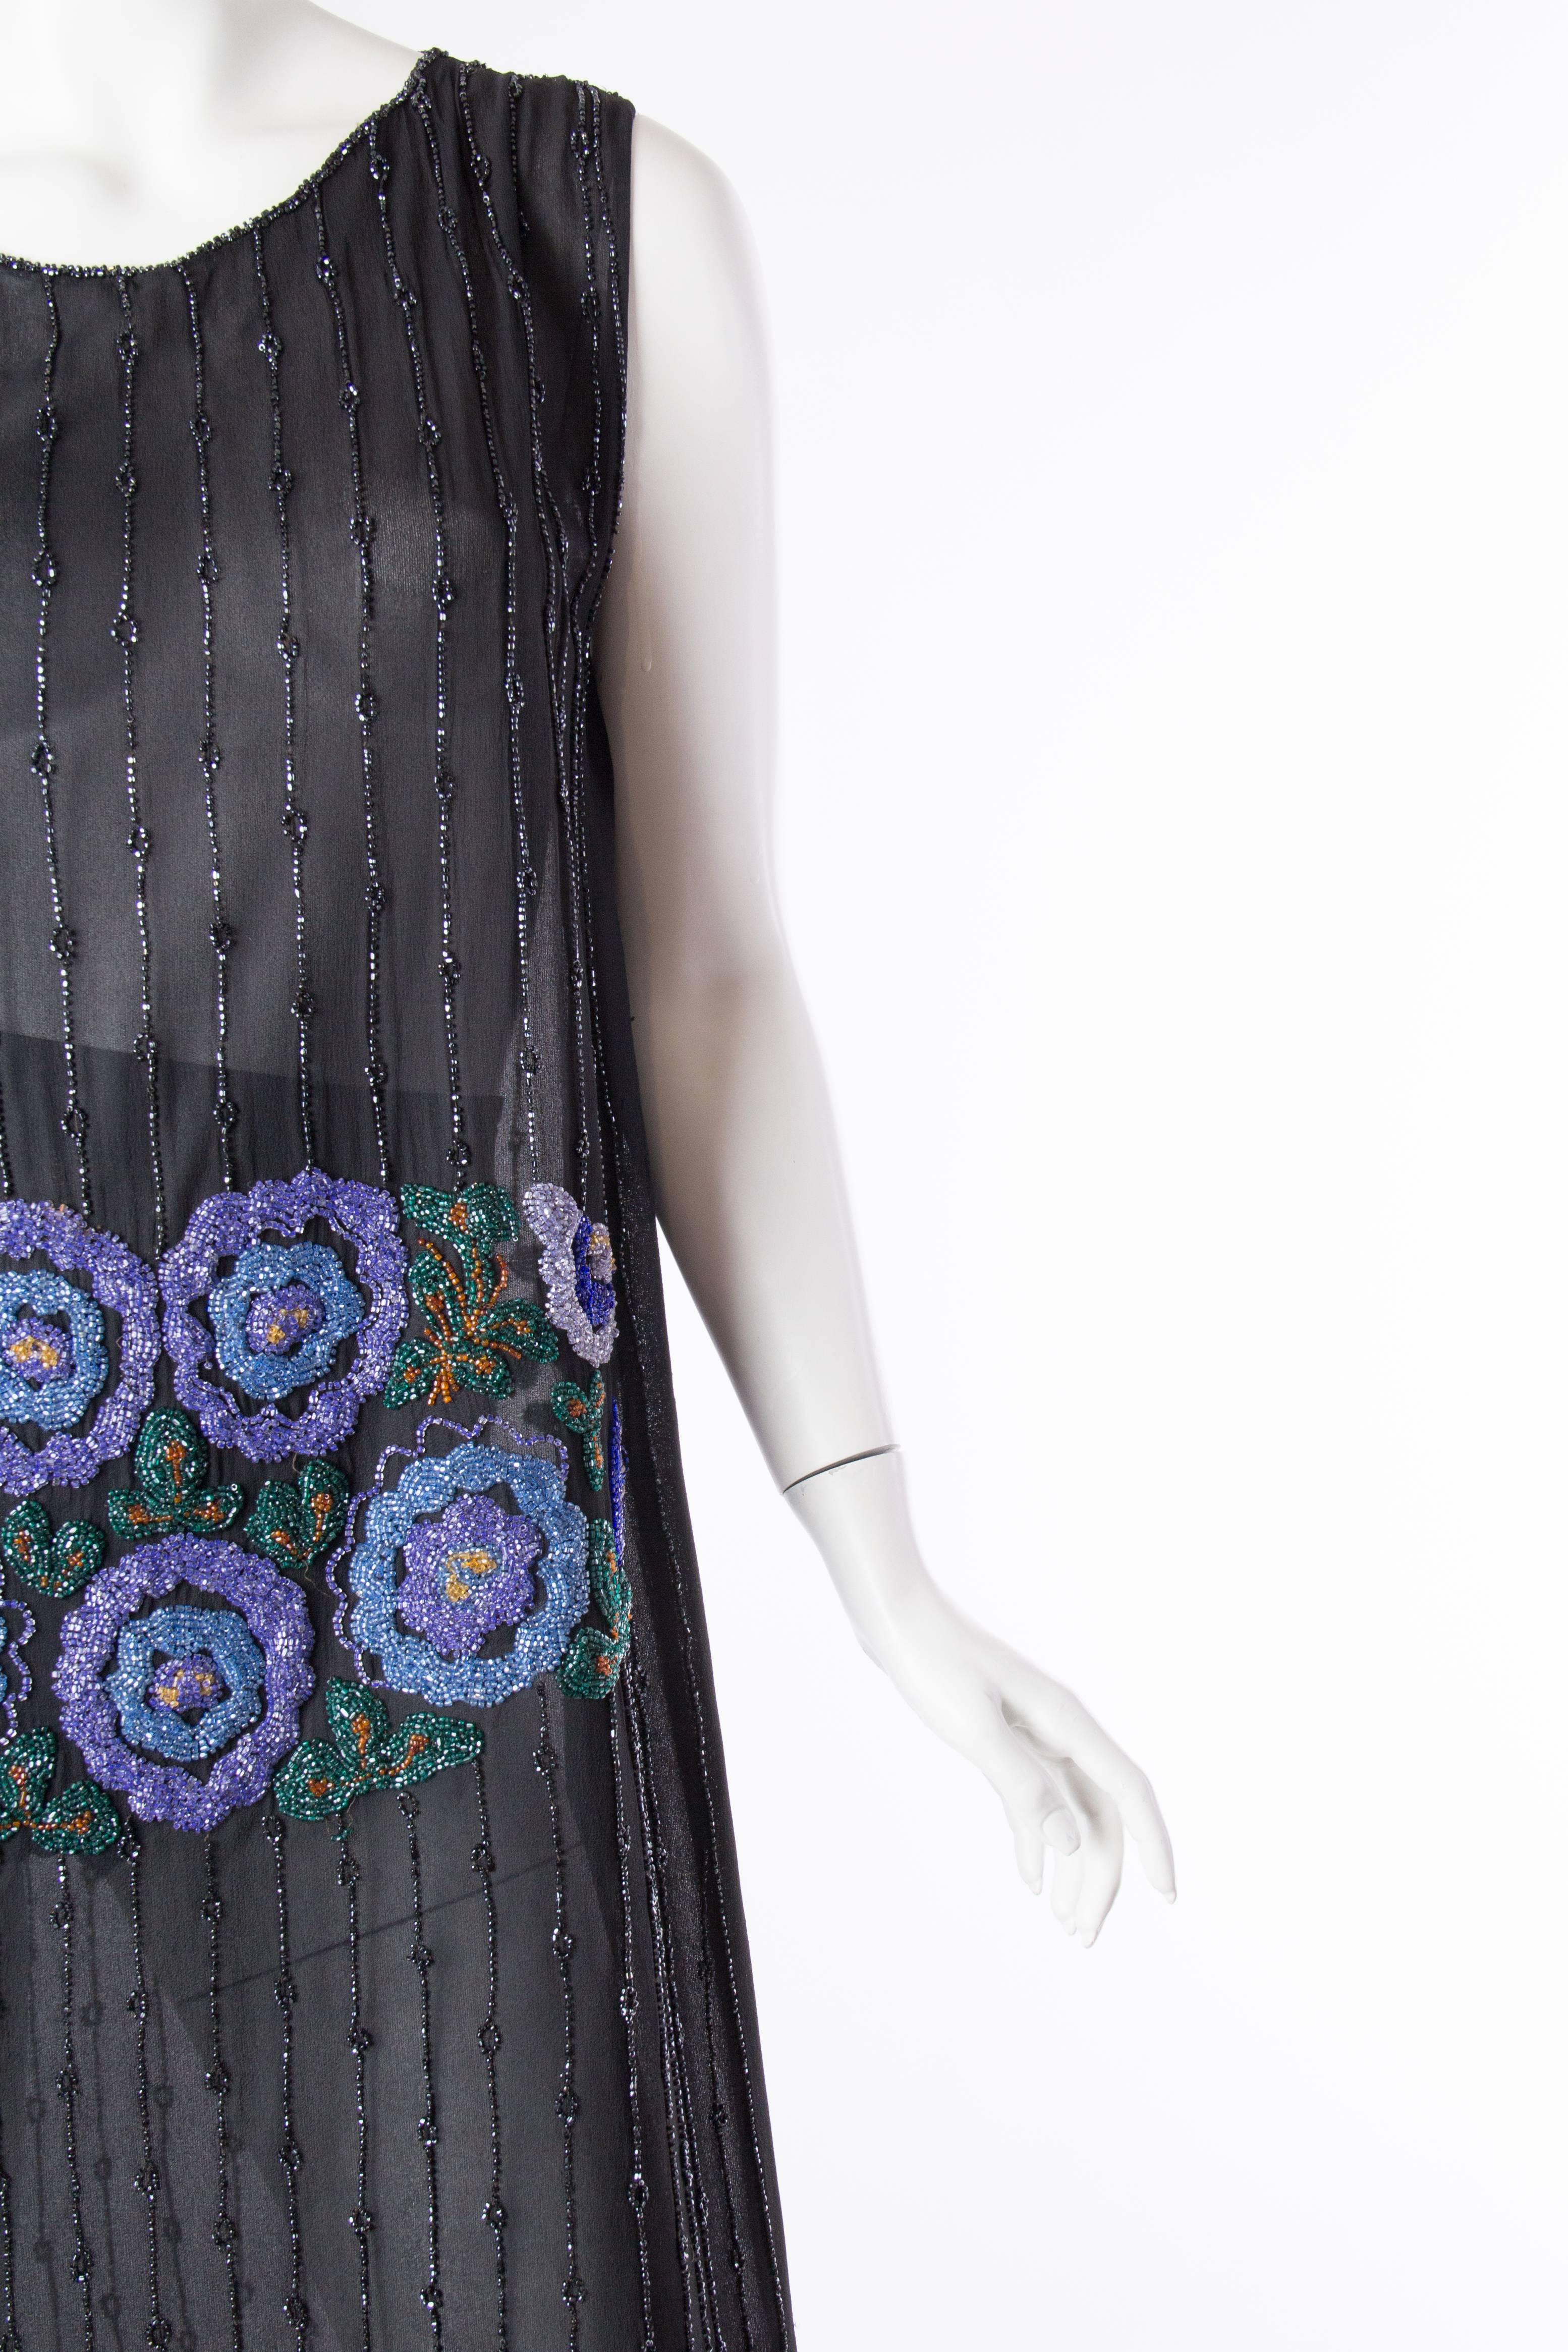 Women's 1920S Black Silk Chiffon Flapper Dress With Blue & Green Floral Beadwork For Sale